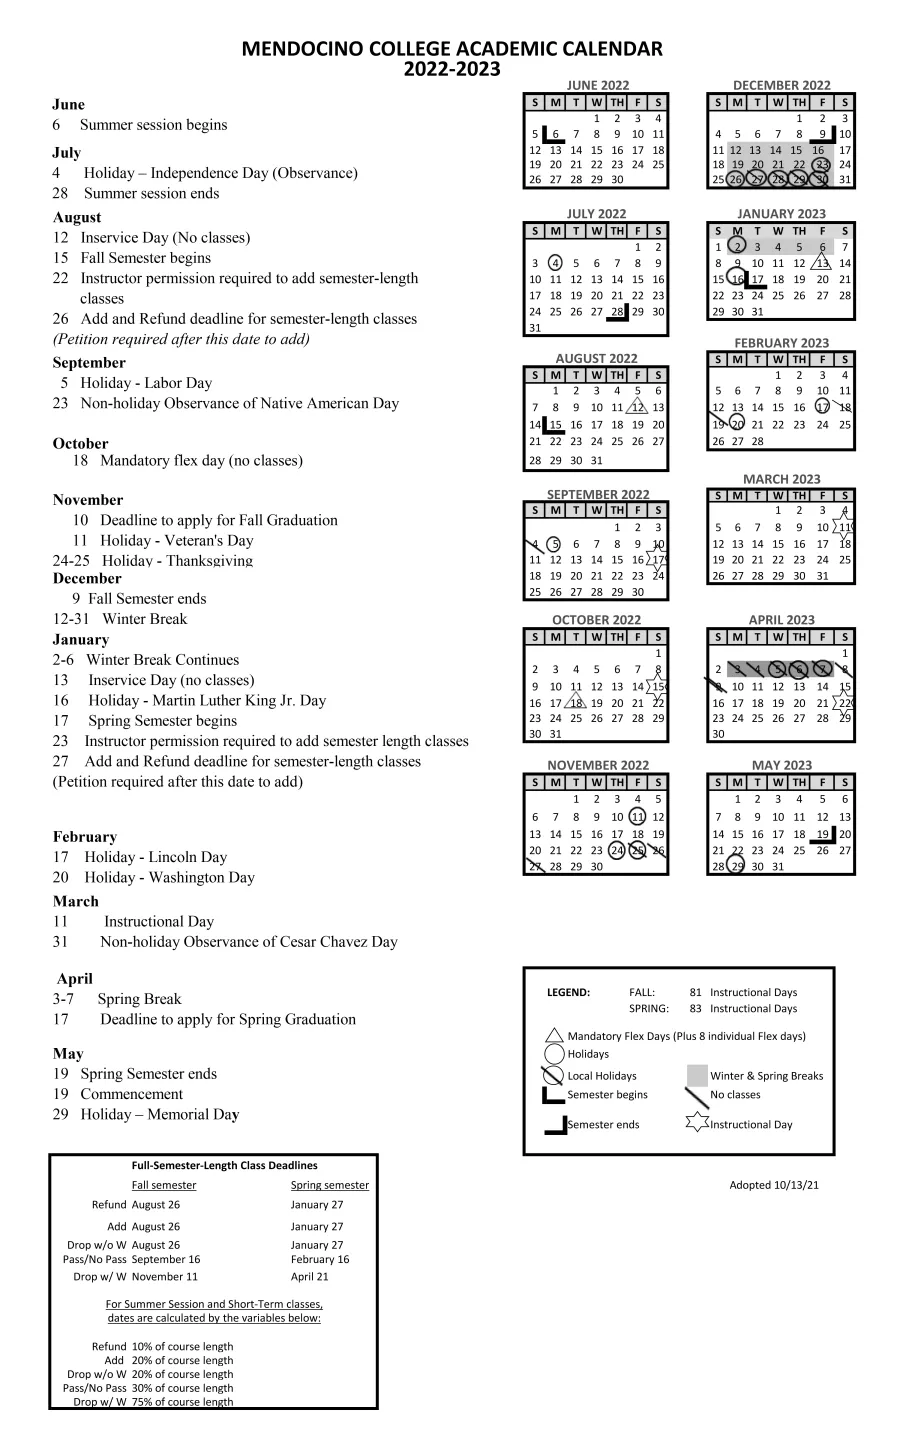 22-23 Academic Calendar